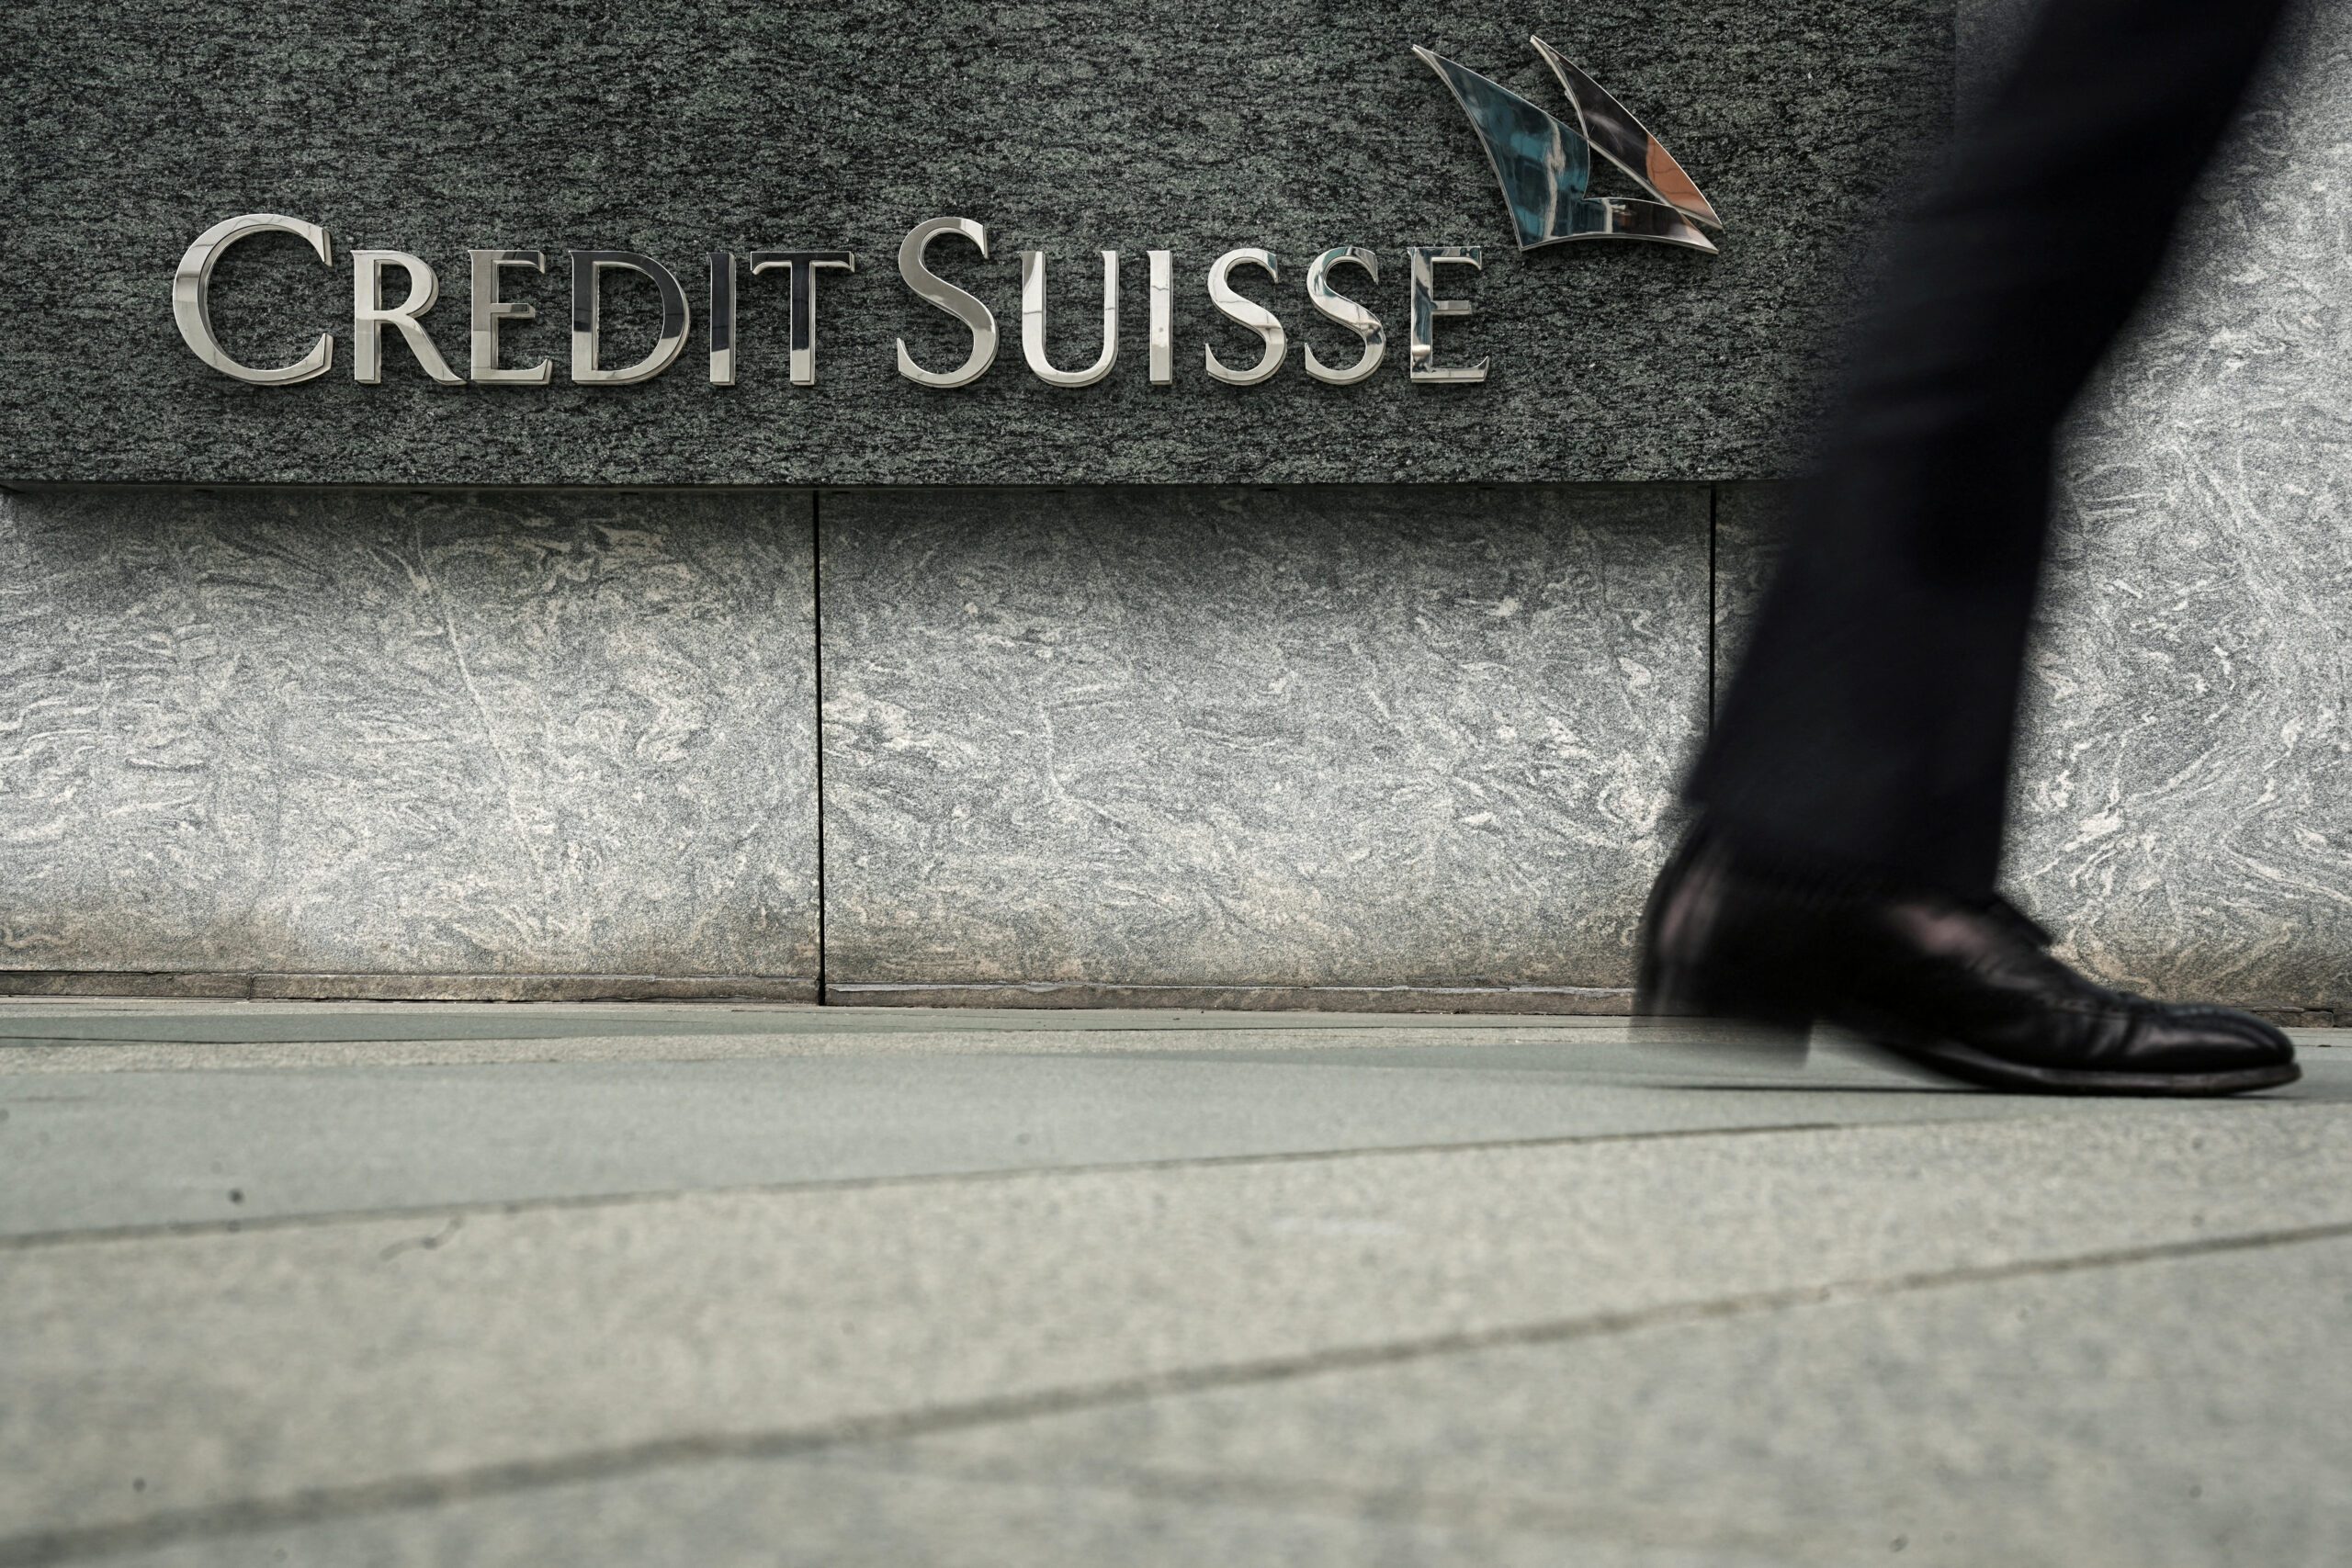 Credit Suisse Hong Kong to start cutting investing banking jobs this week